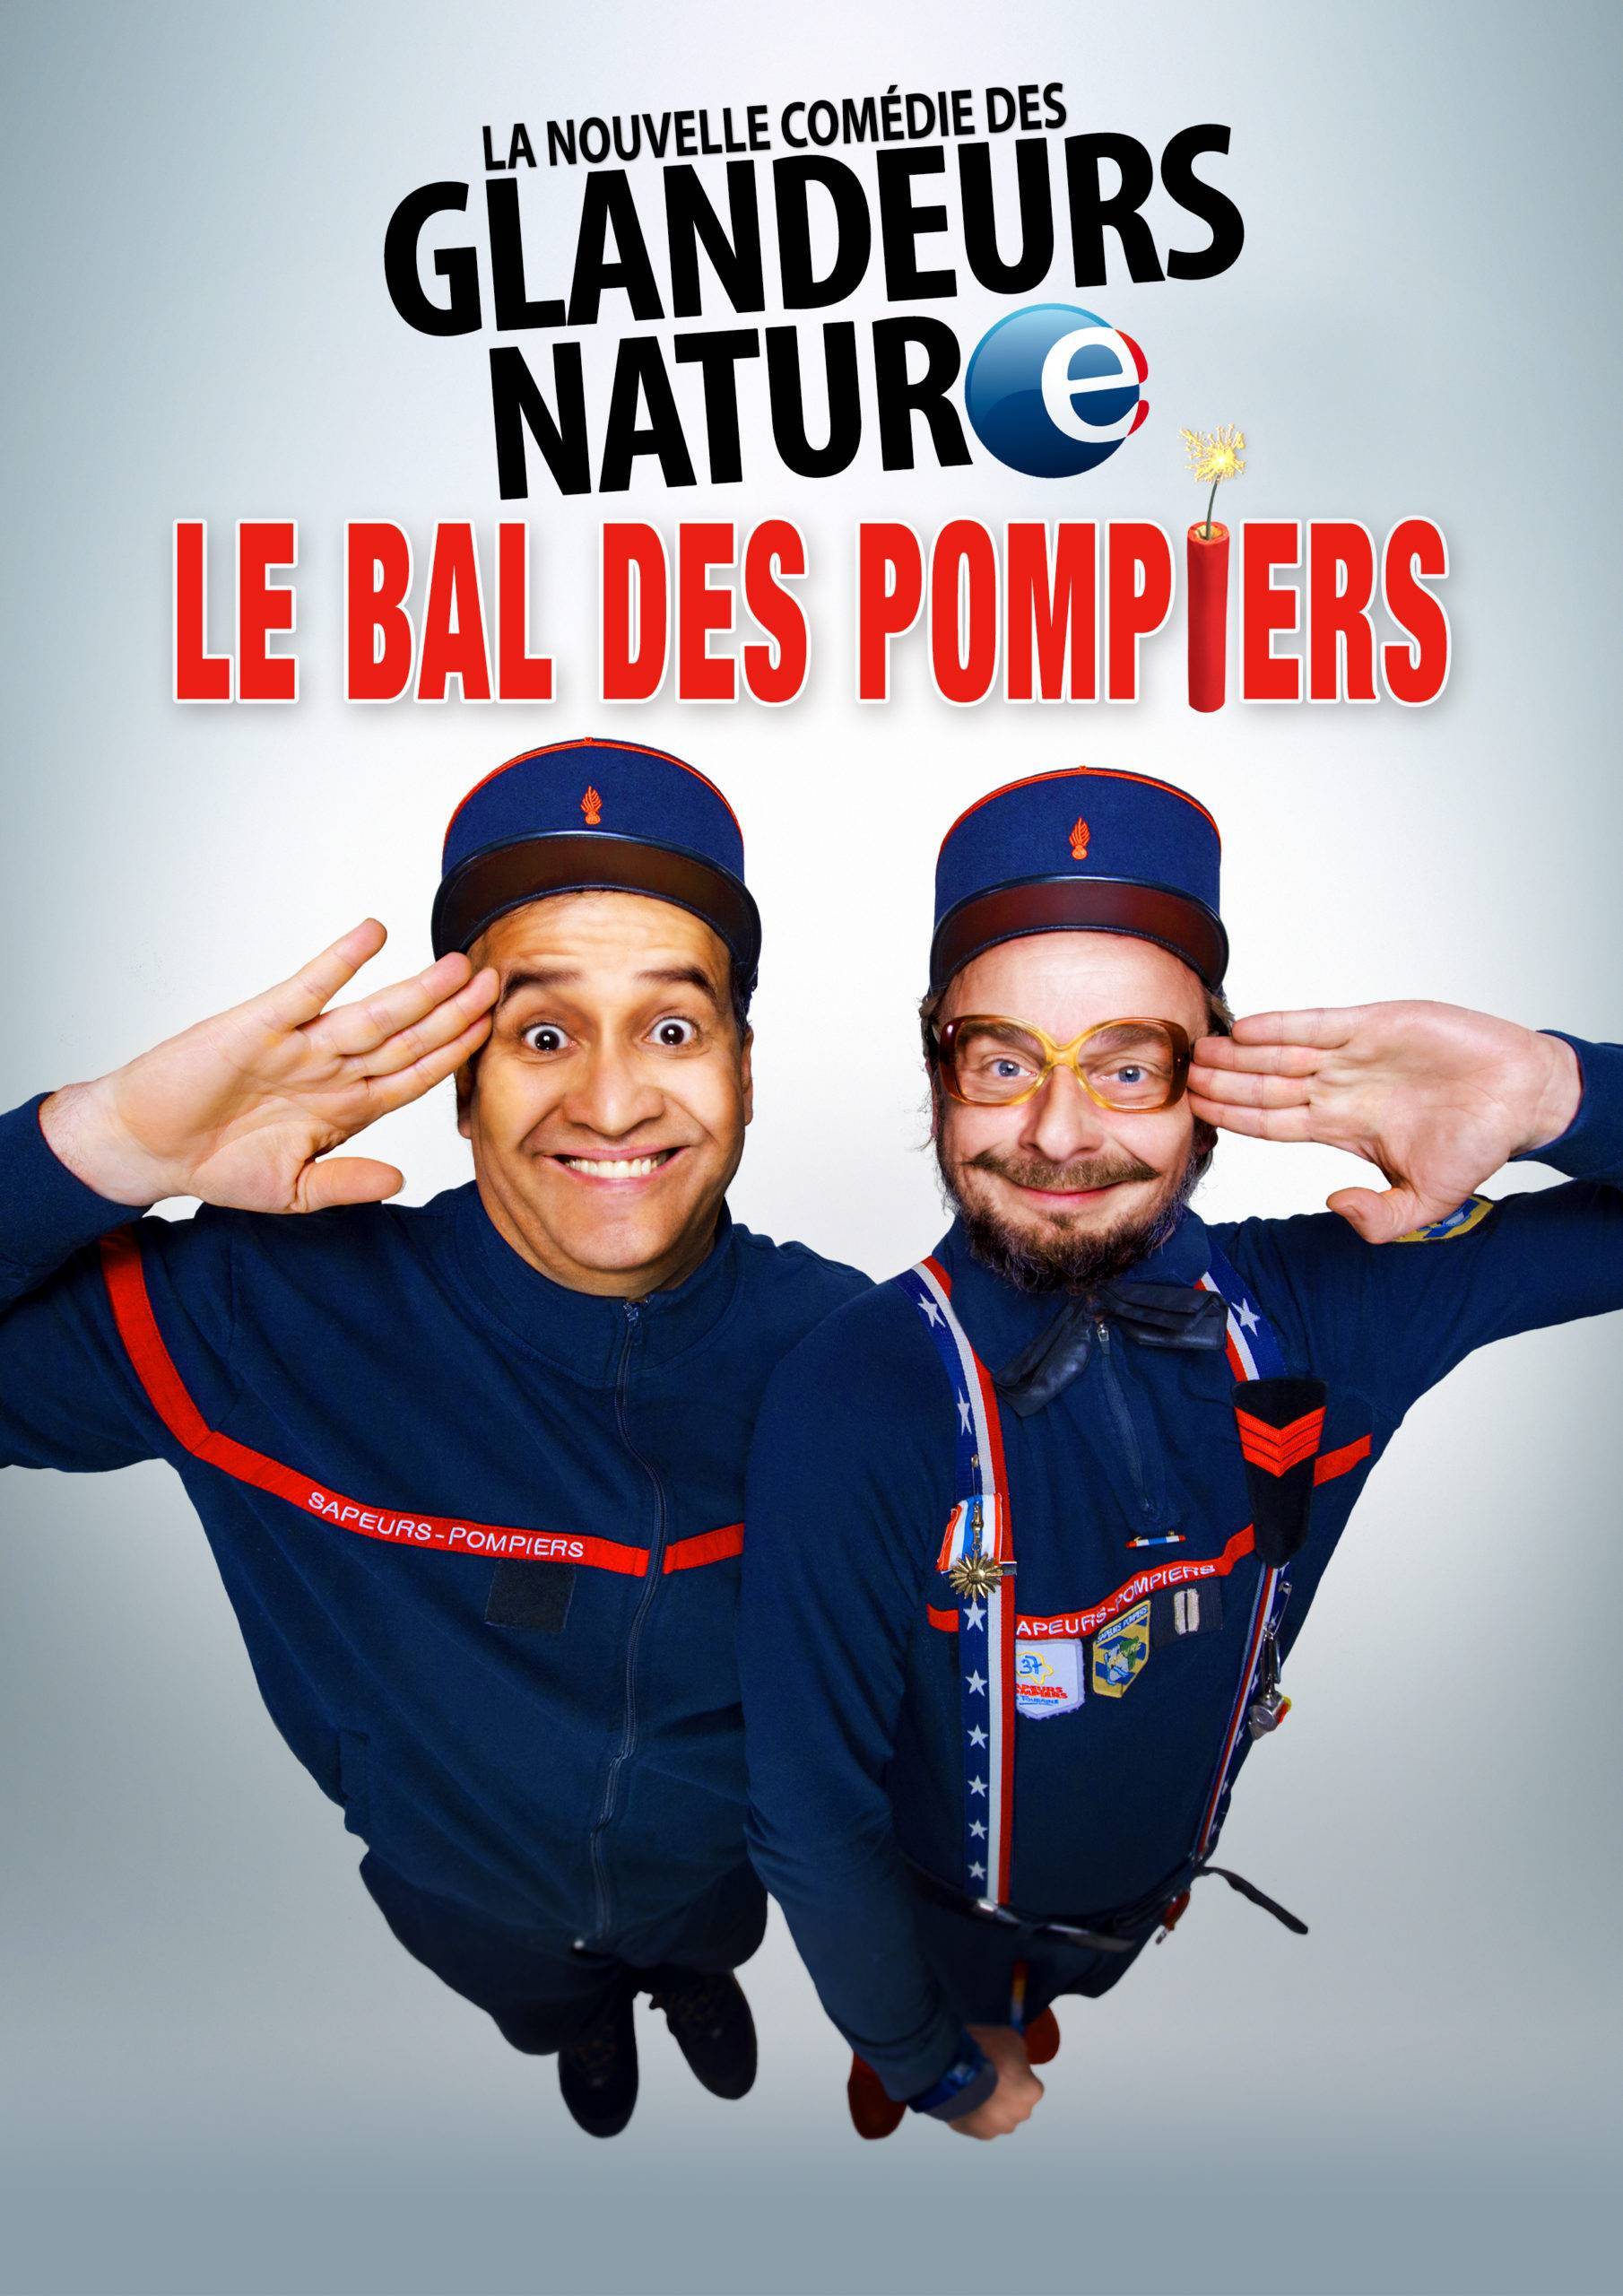 Les Glandeurs Nature - Royal Comedy Club - Reims (51)